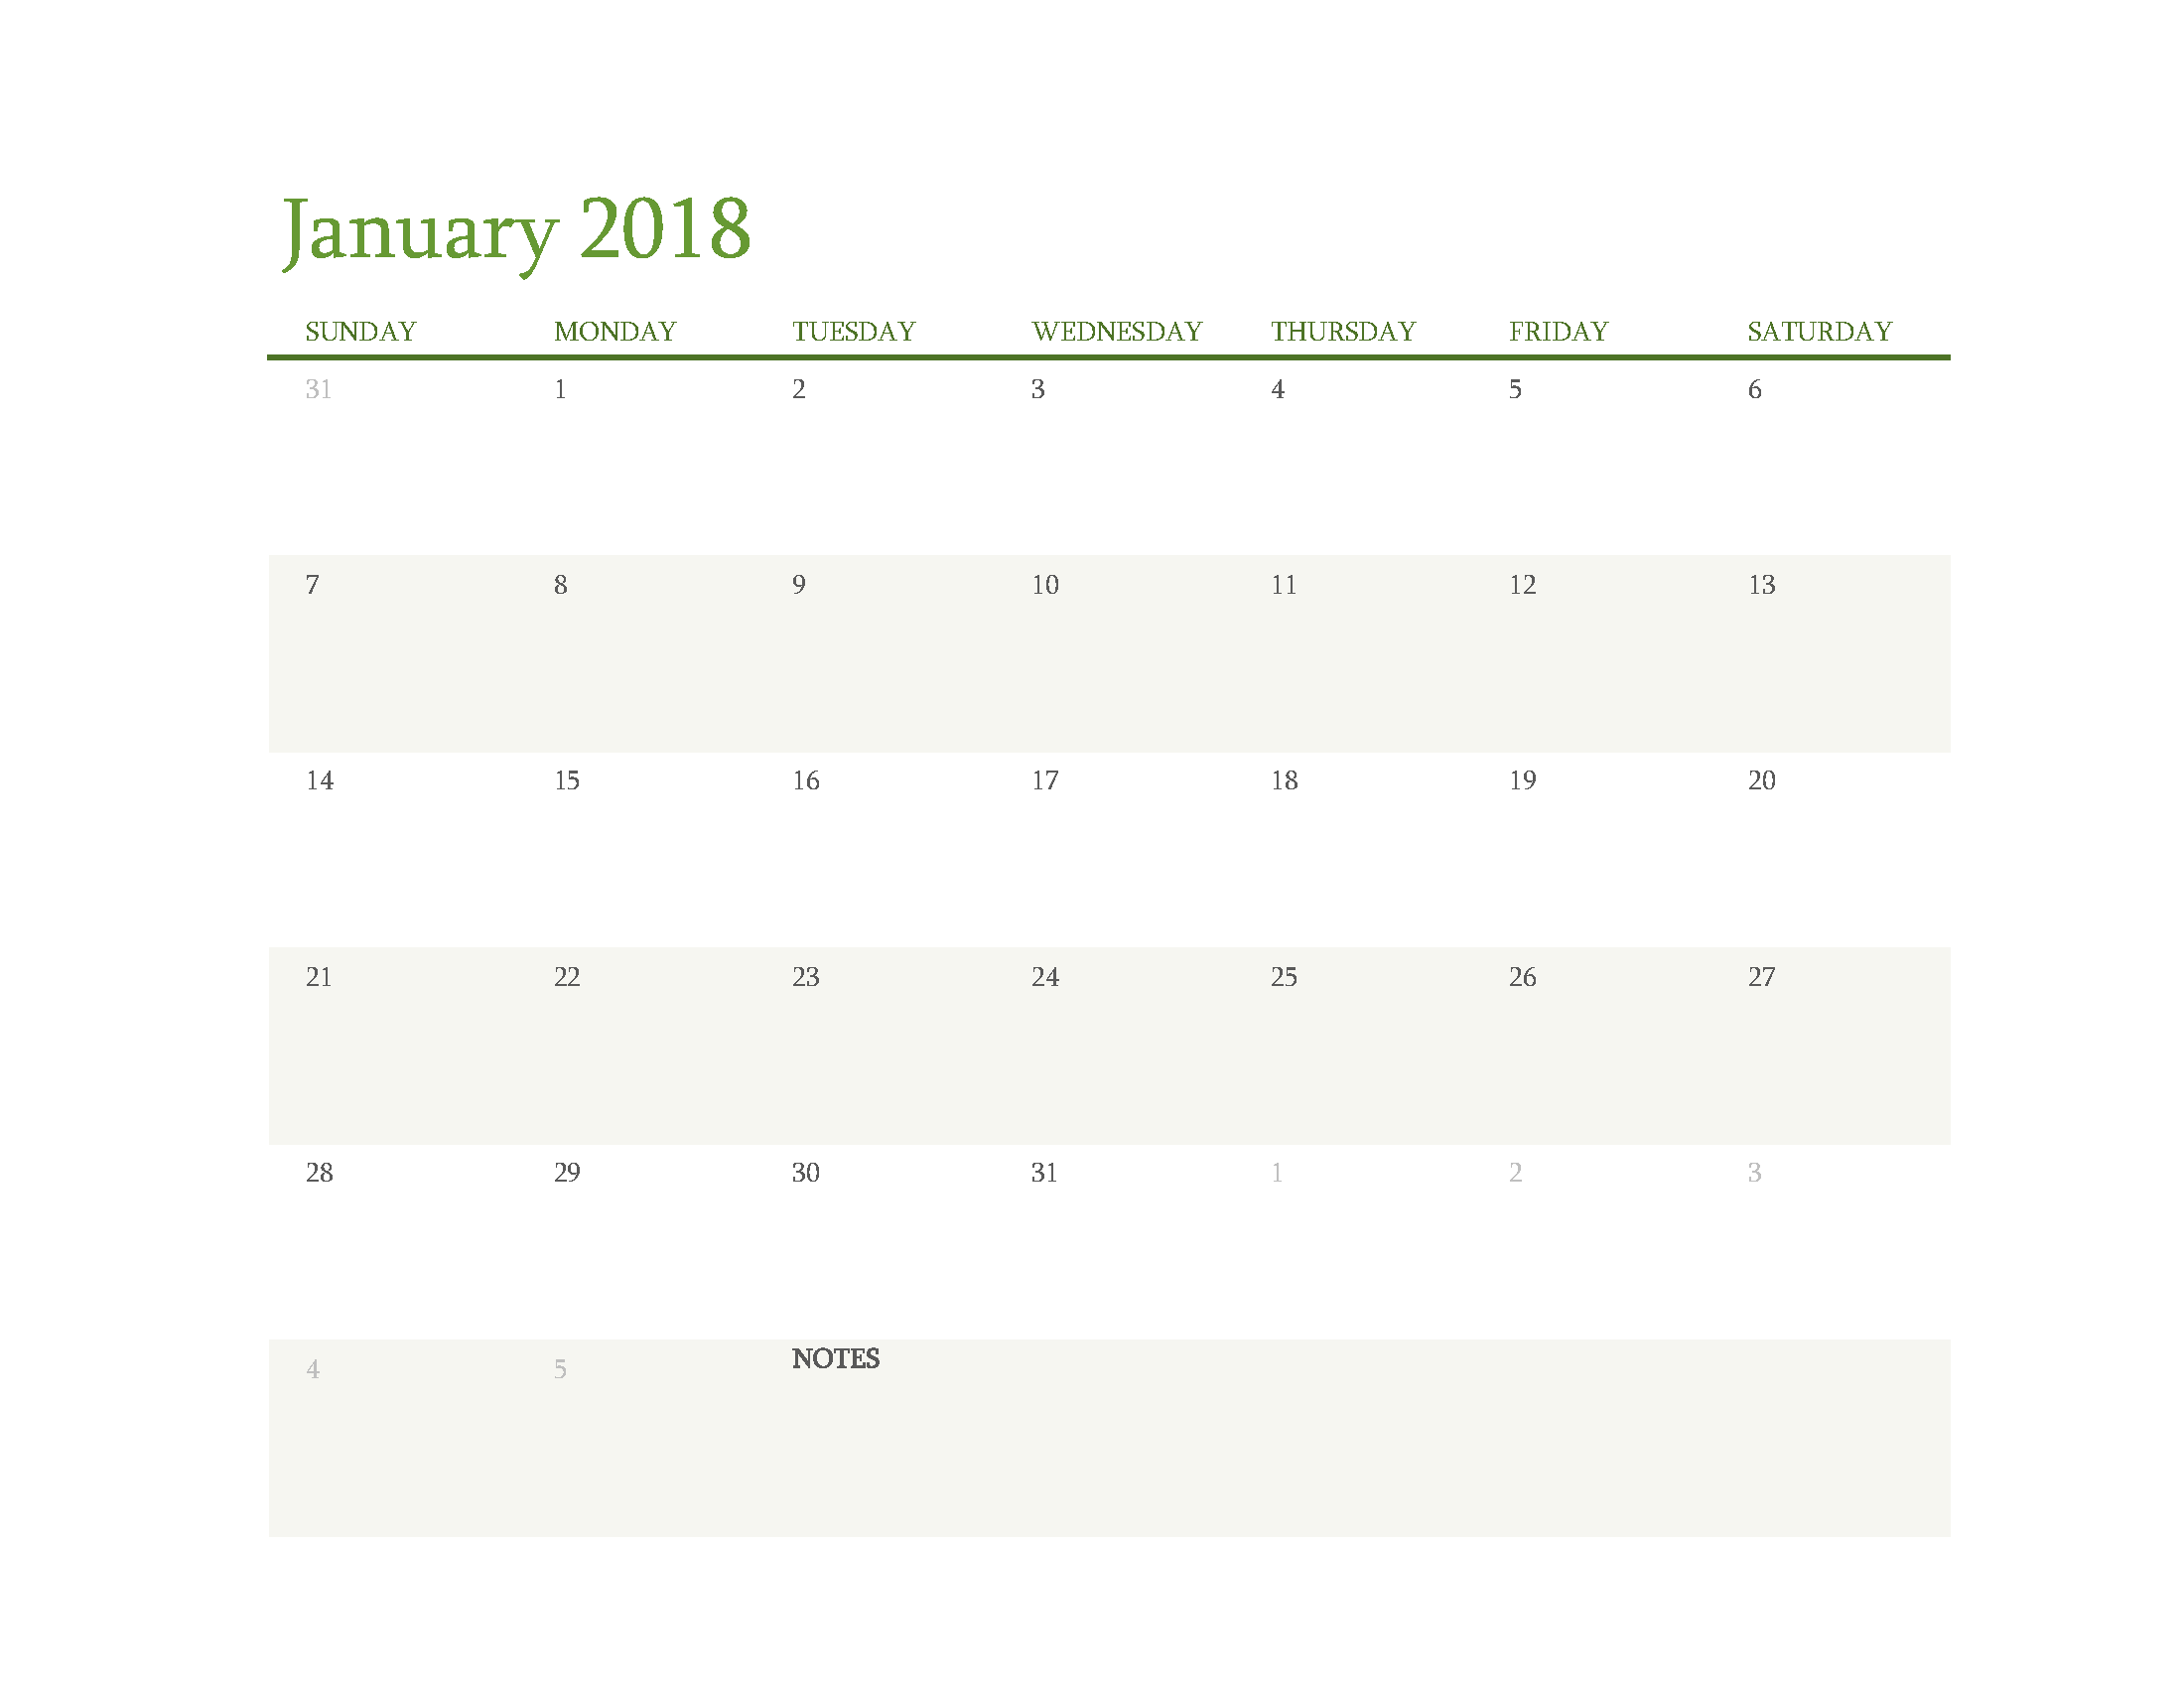 free-calendar-2018-january-printable-pdf-image-start-sunday